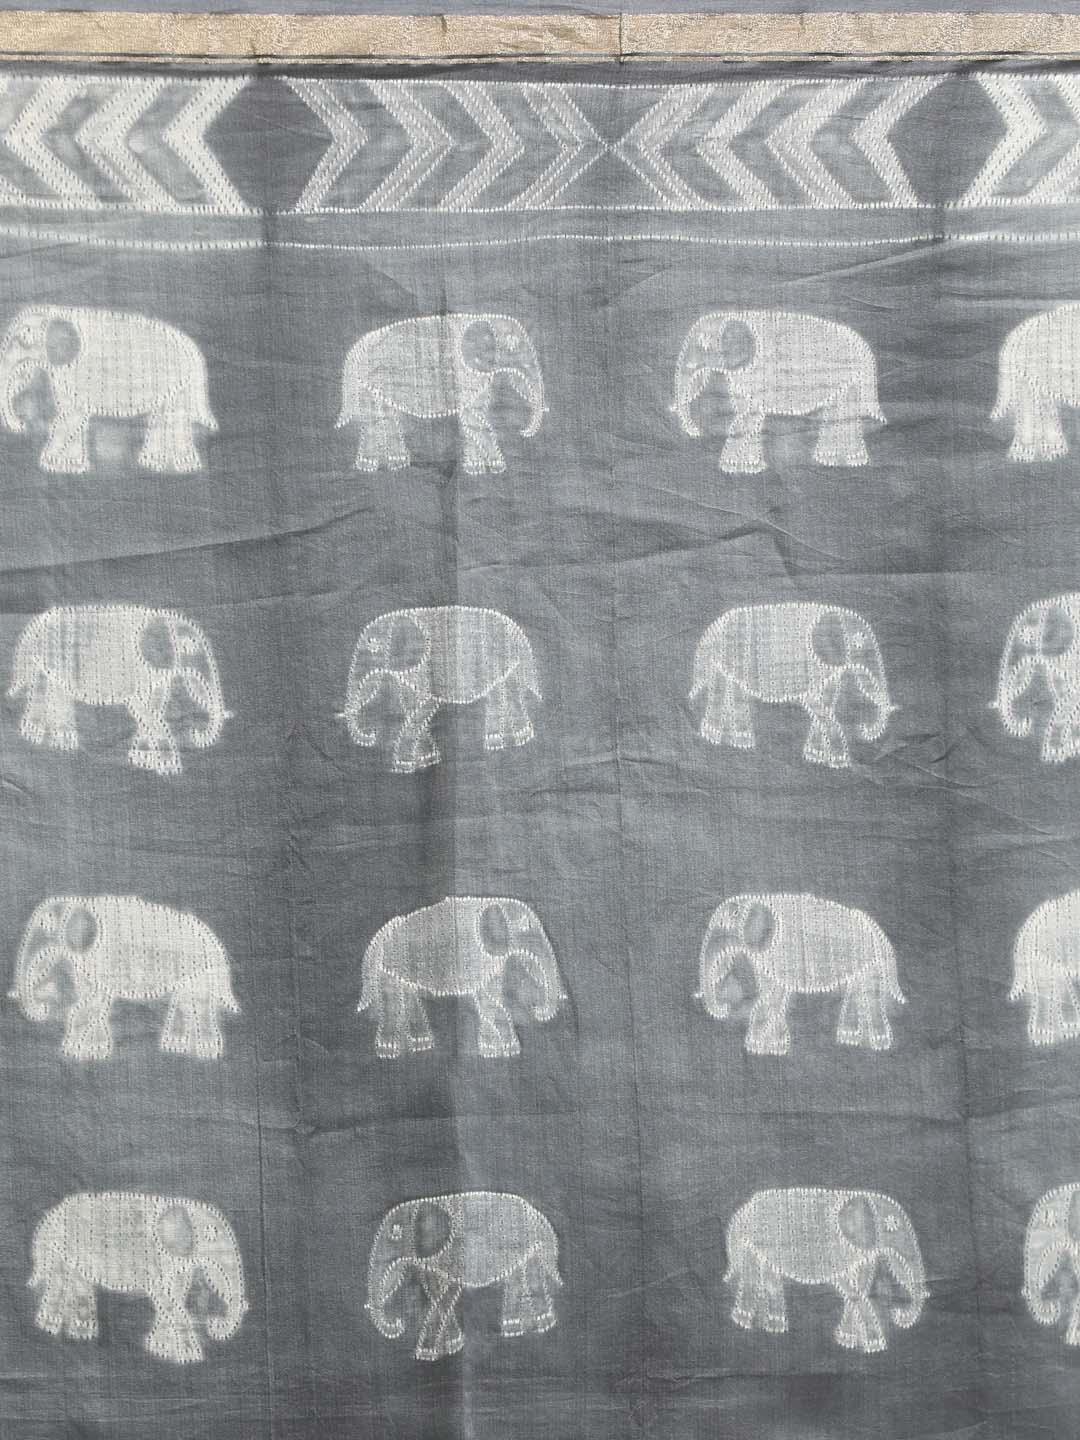 Indethnic Shibori Silk Cotton Saree in Grey - Saree Detail View